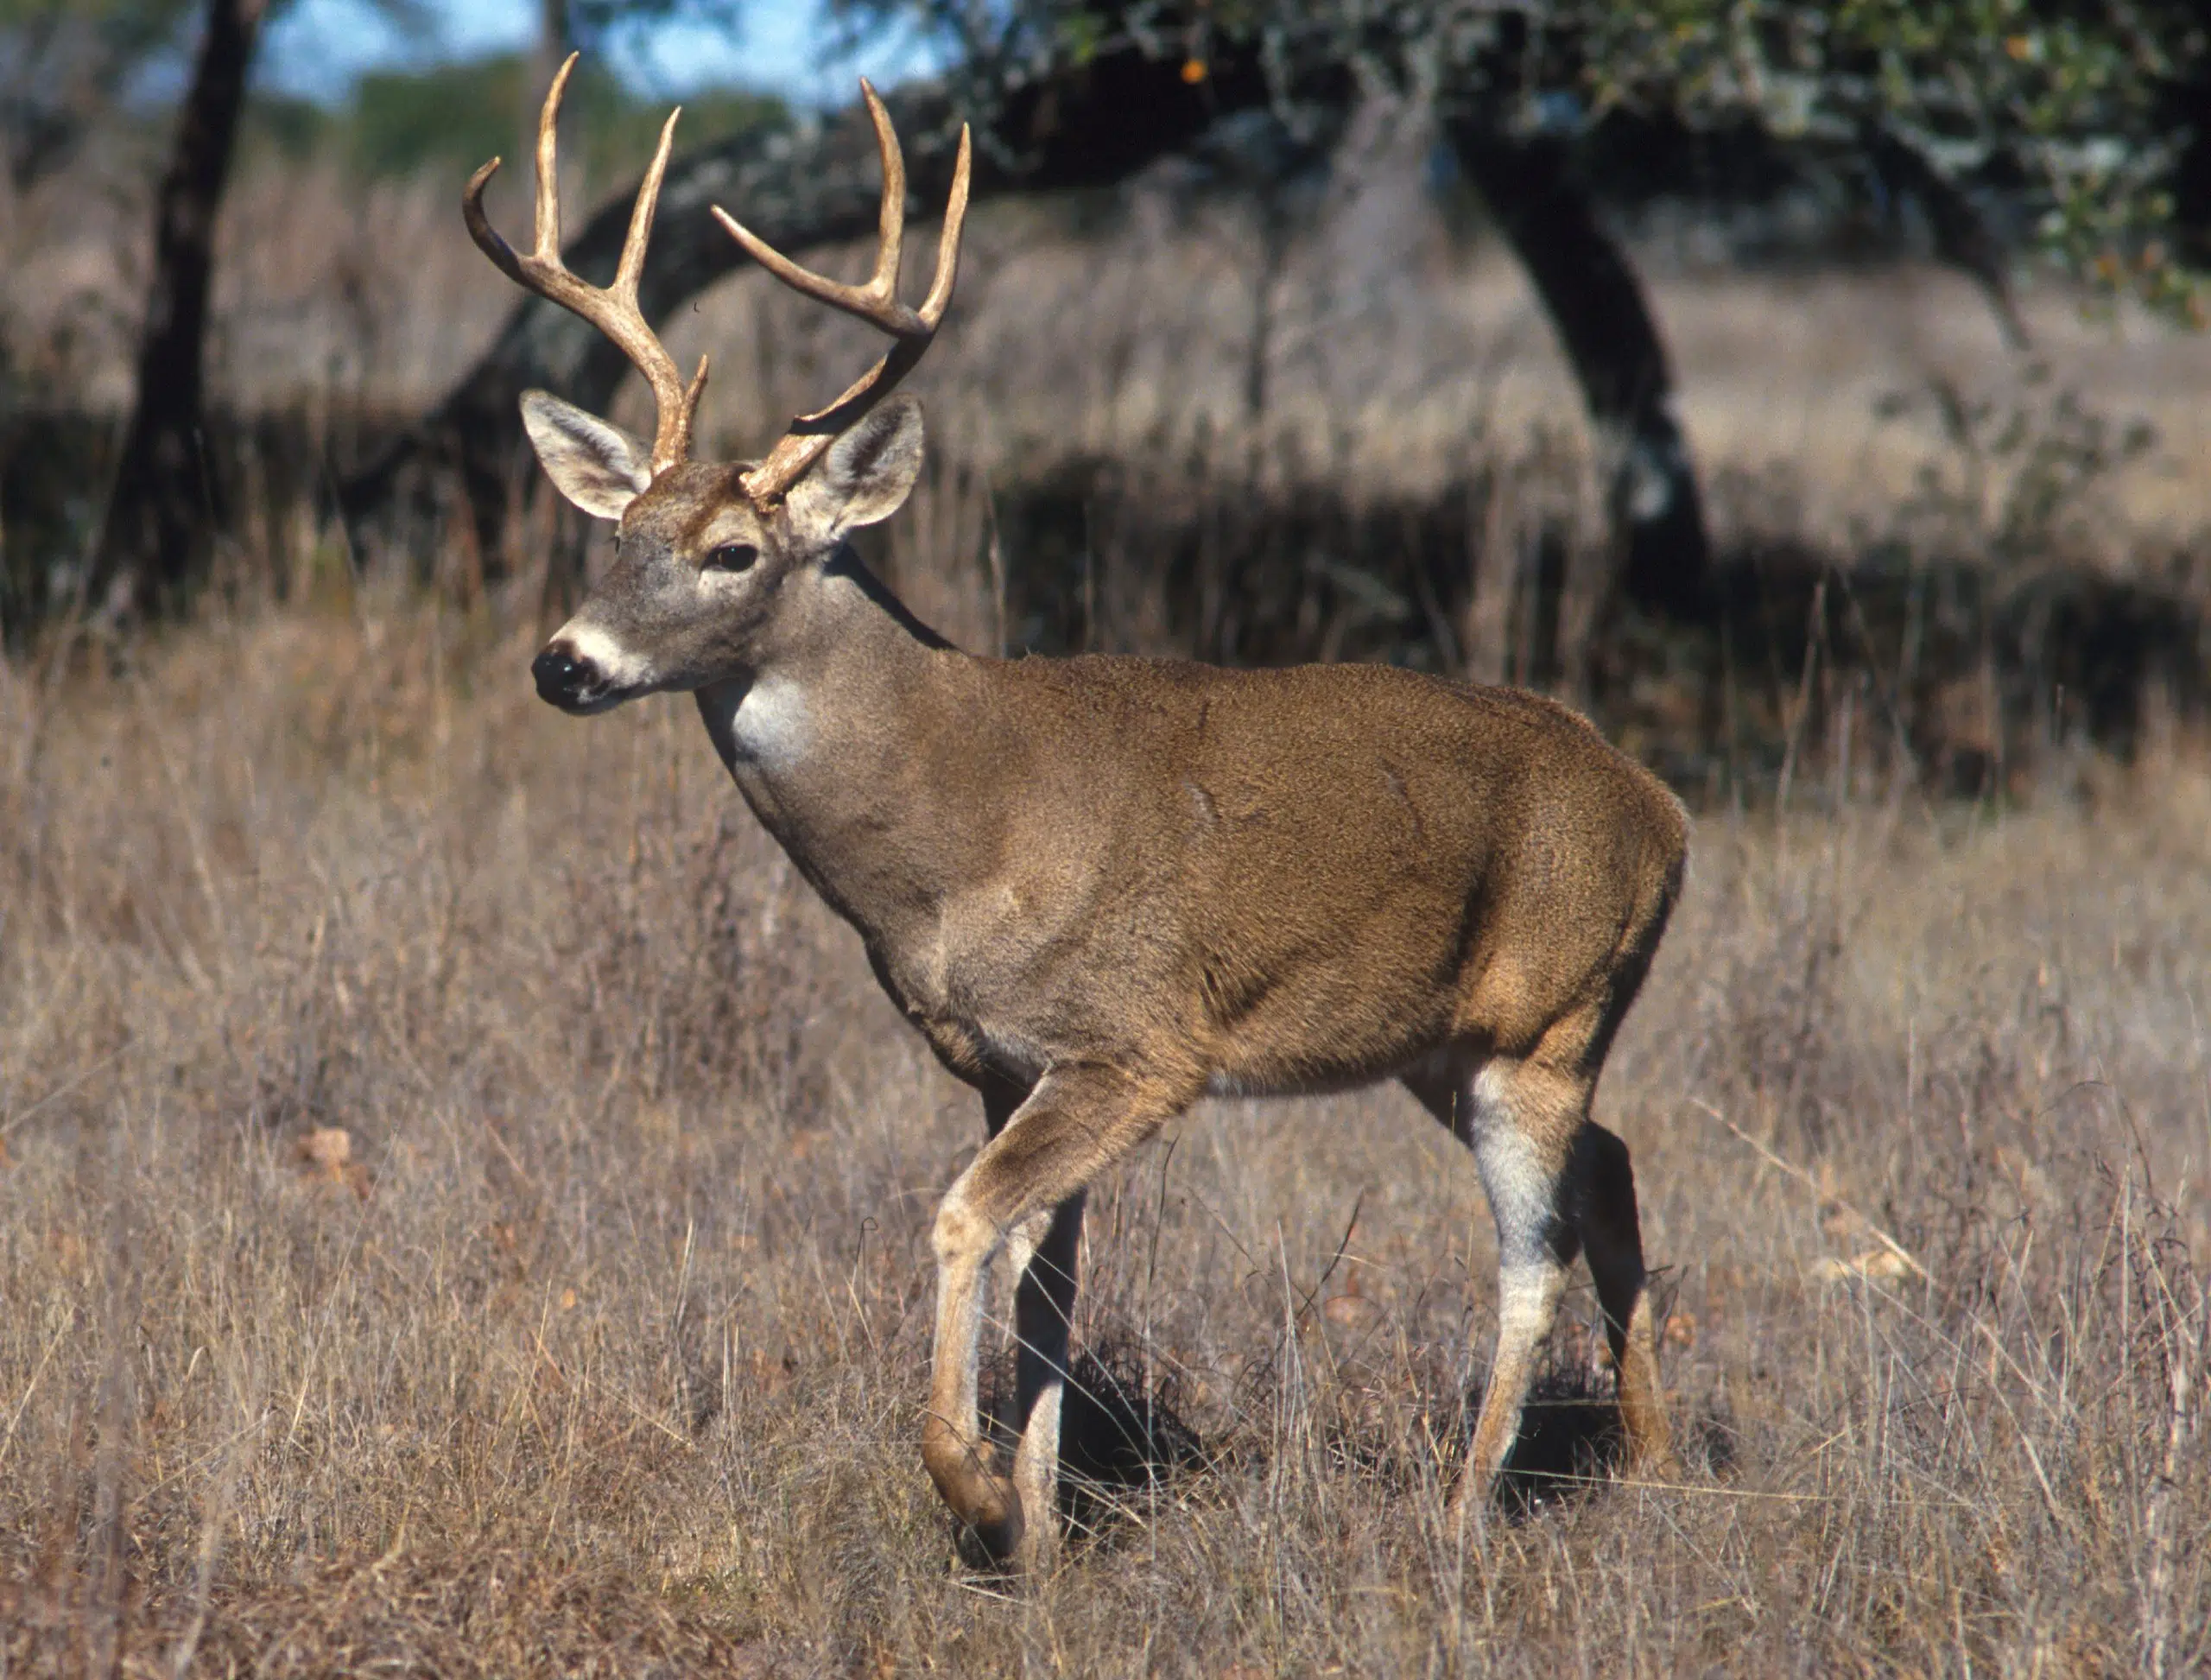 Province institutes mandatory sampling program for deer hunted in Kootenay region